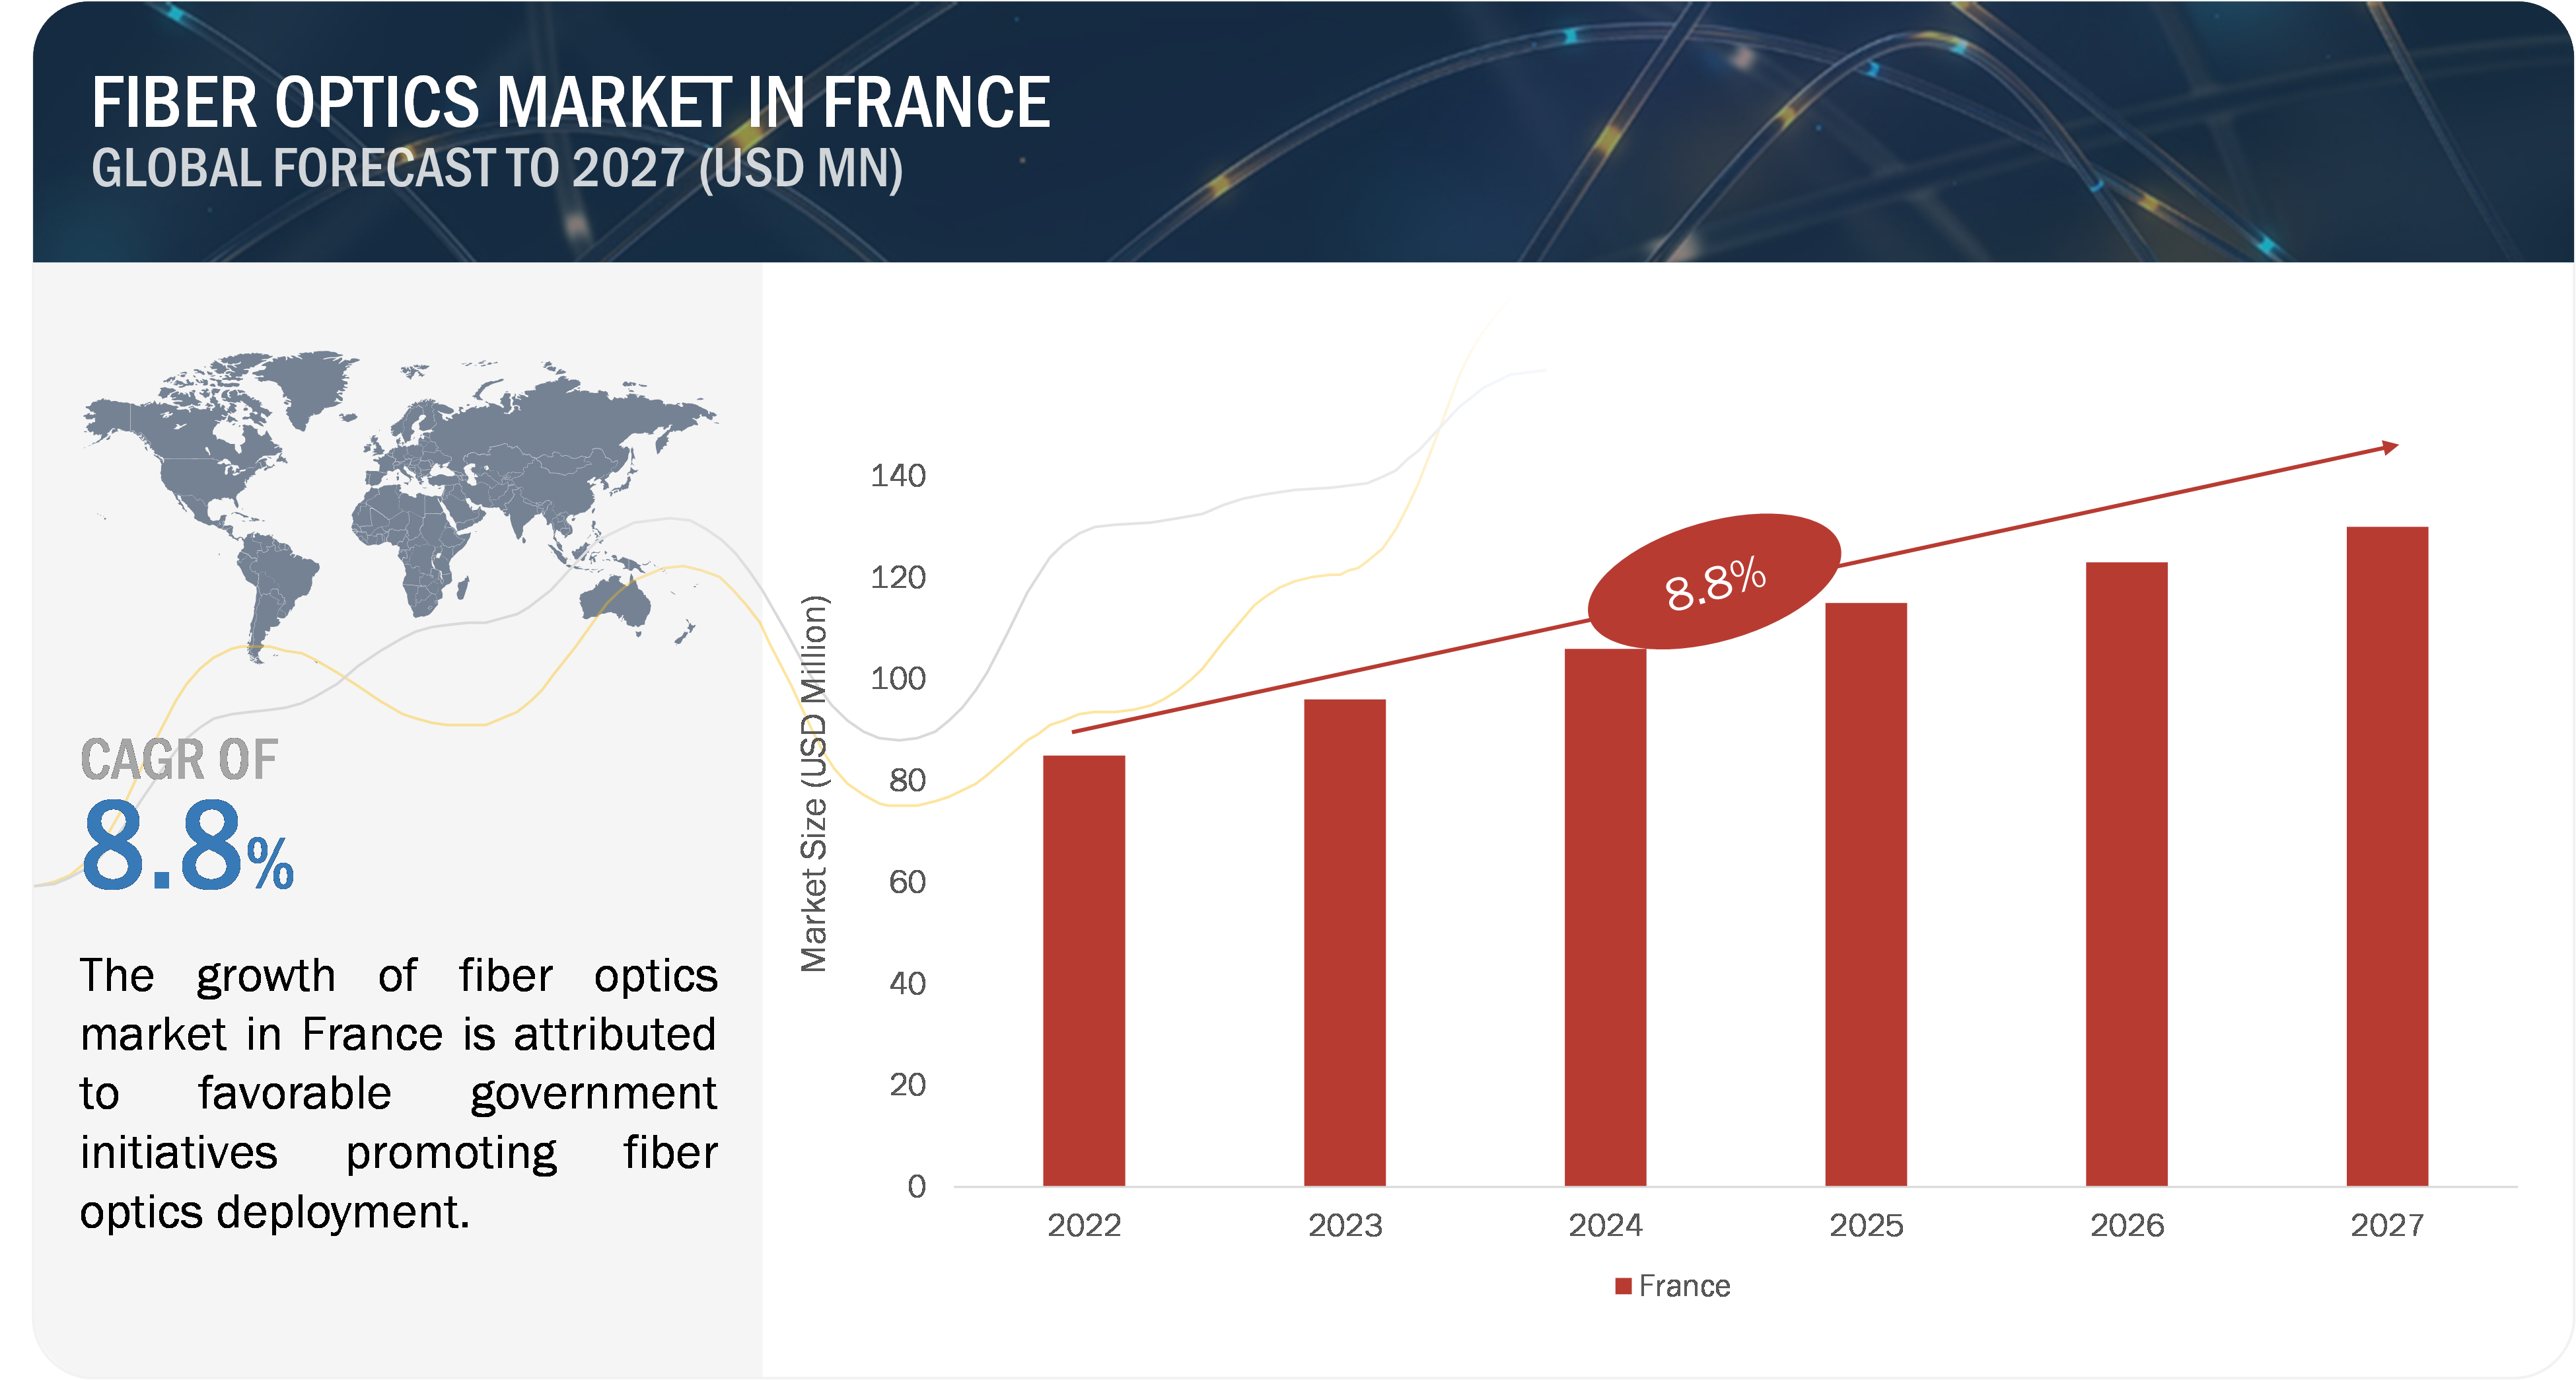 Fiber Optics Market Growth in France